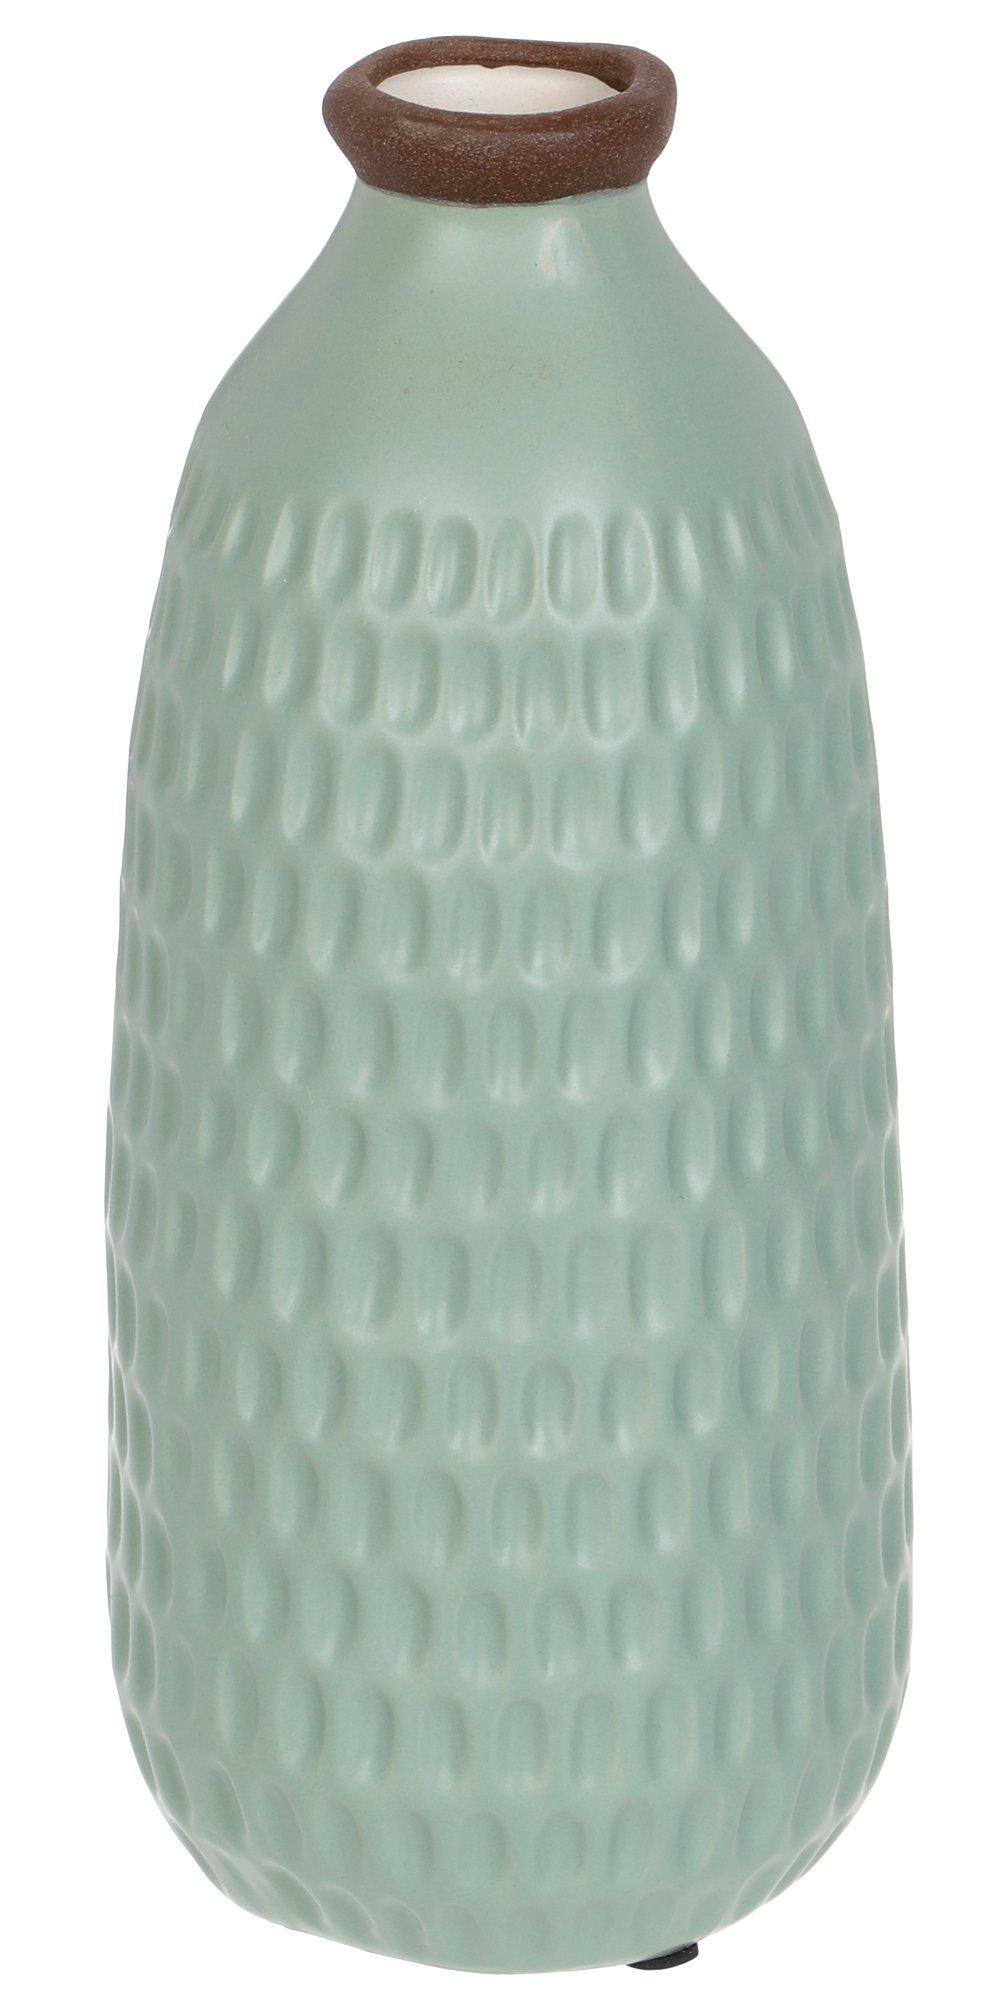 12 in Decorative Textured Vase